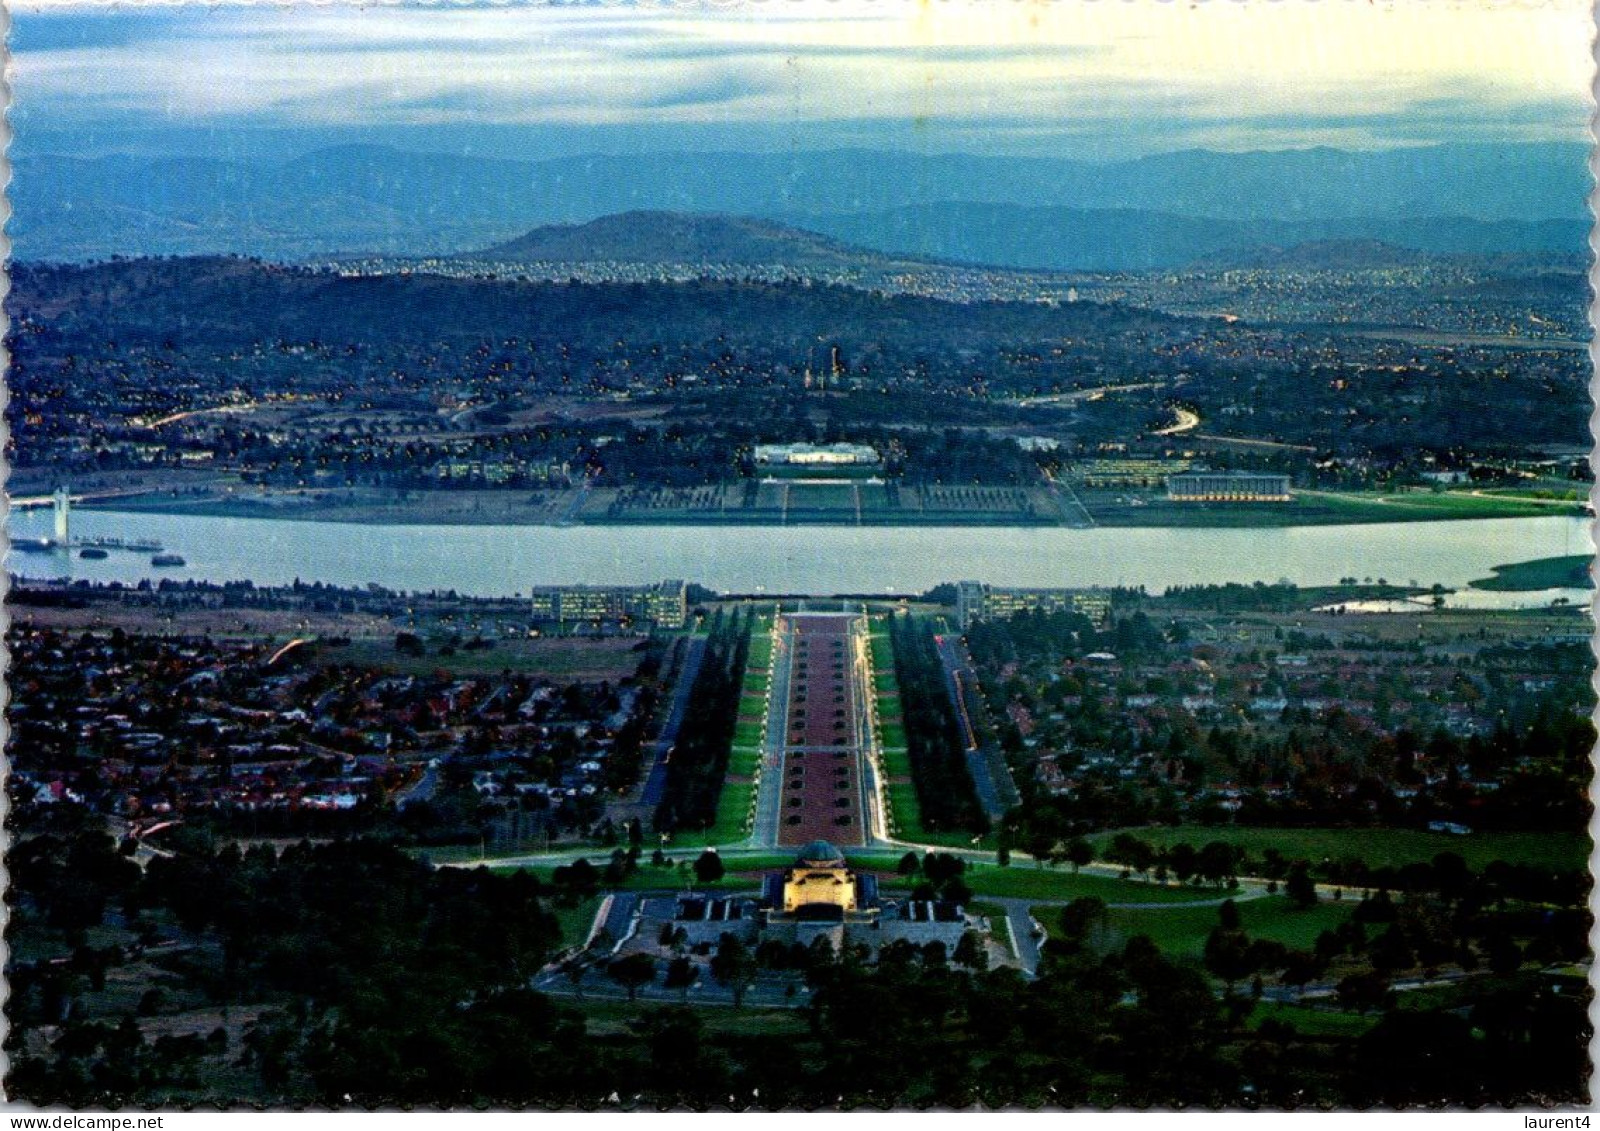 5-9-2023 (4 T 16) Australia - ACT - City Of Canberra ANZAC Parade & Austrlaian War Memorial - Canberra (ACT)